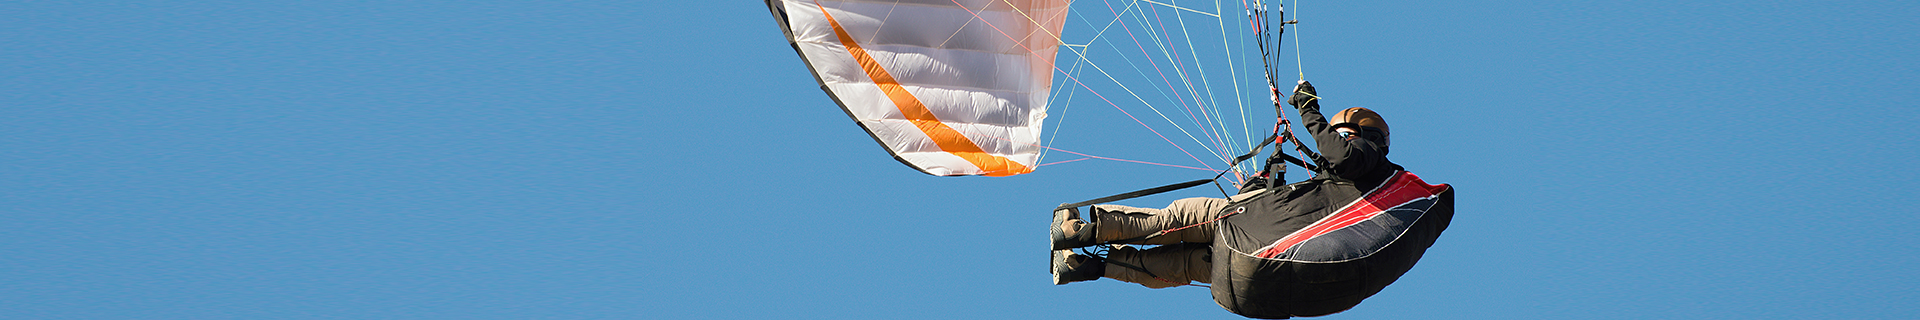 Kitesurfing products